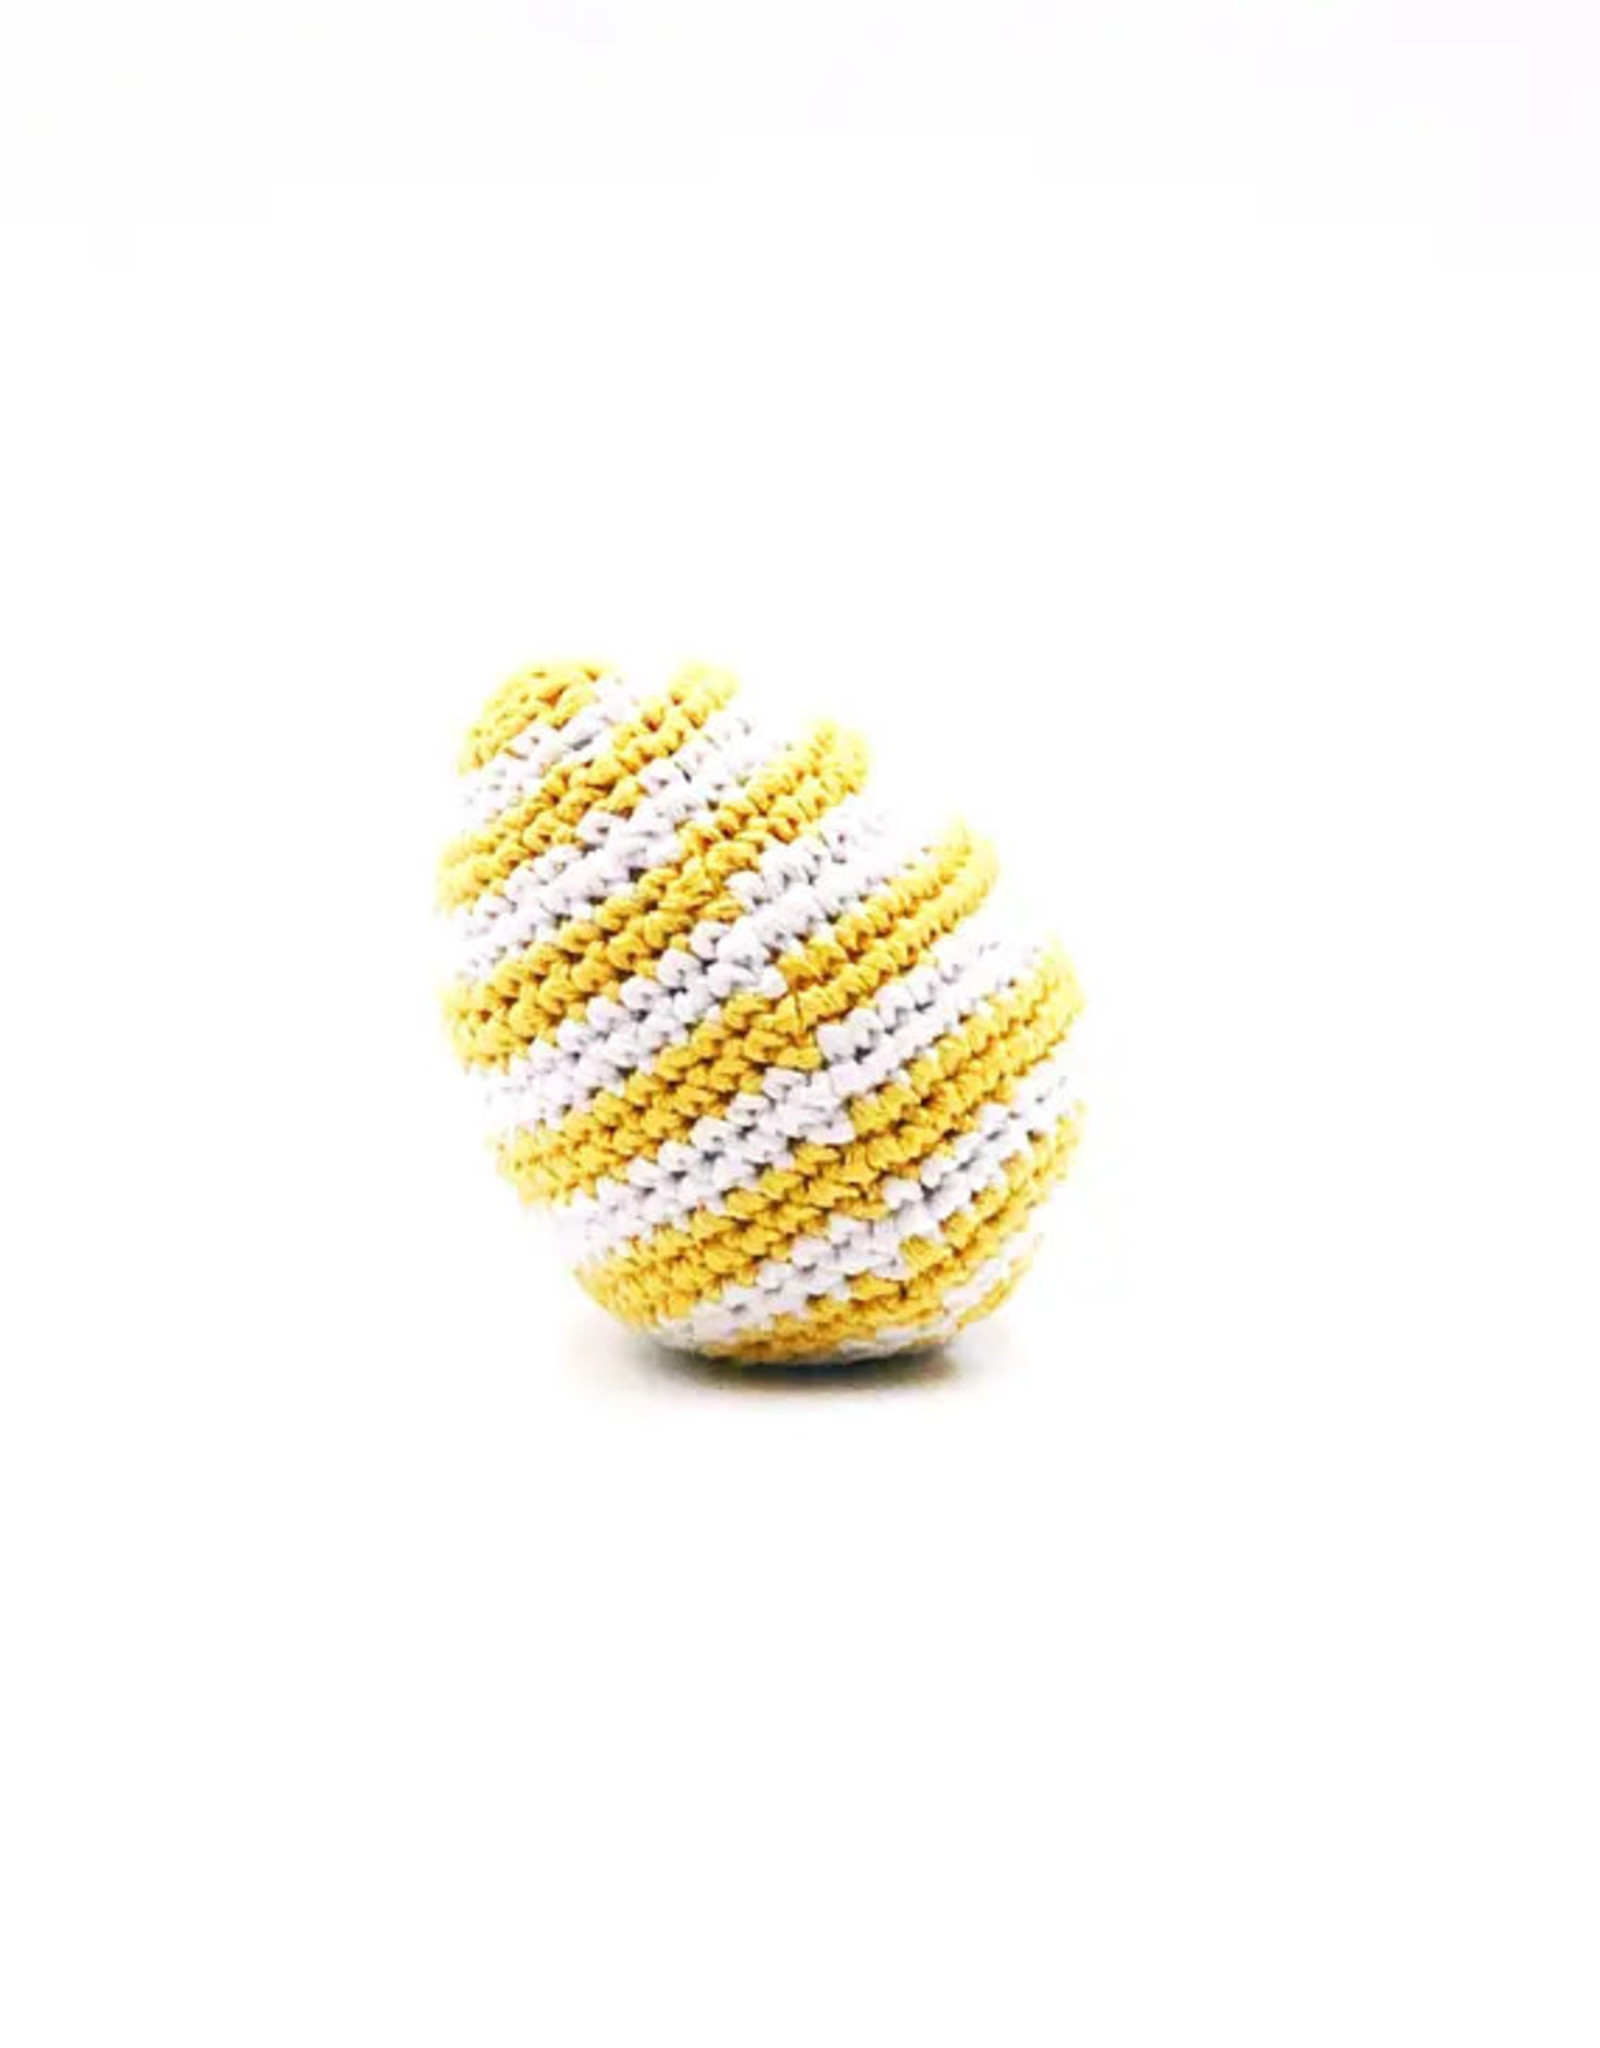 Pebble Yellow Striped Easter Egg